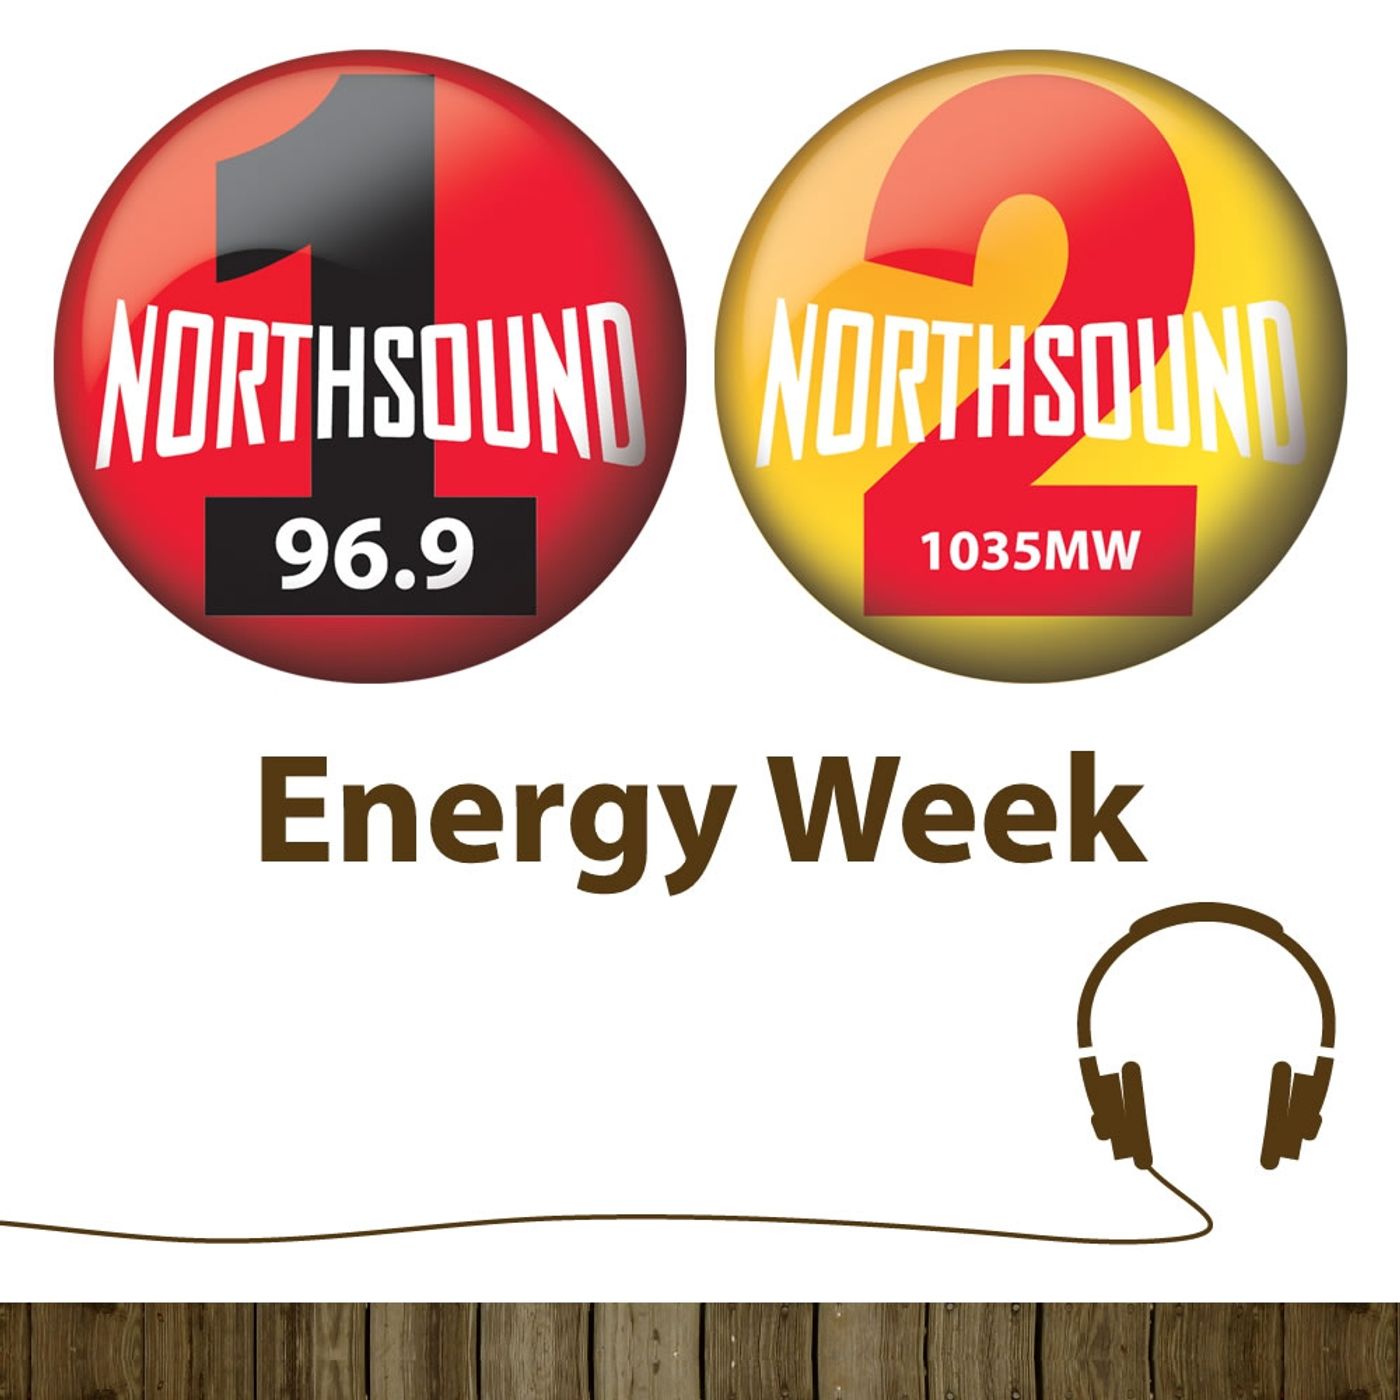 Northsound Energy Week 11.7.14